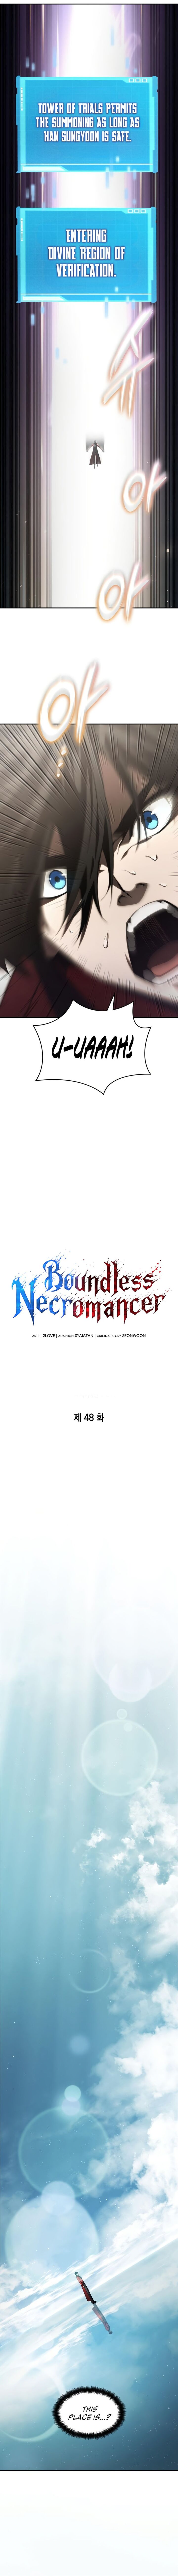 Boundless Necromancer 48 8